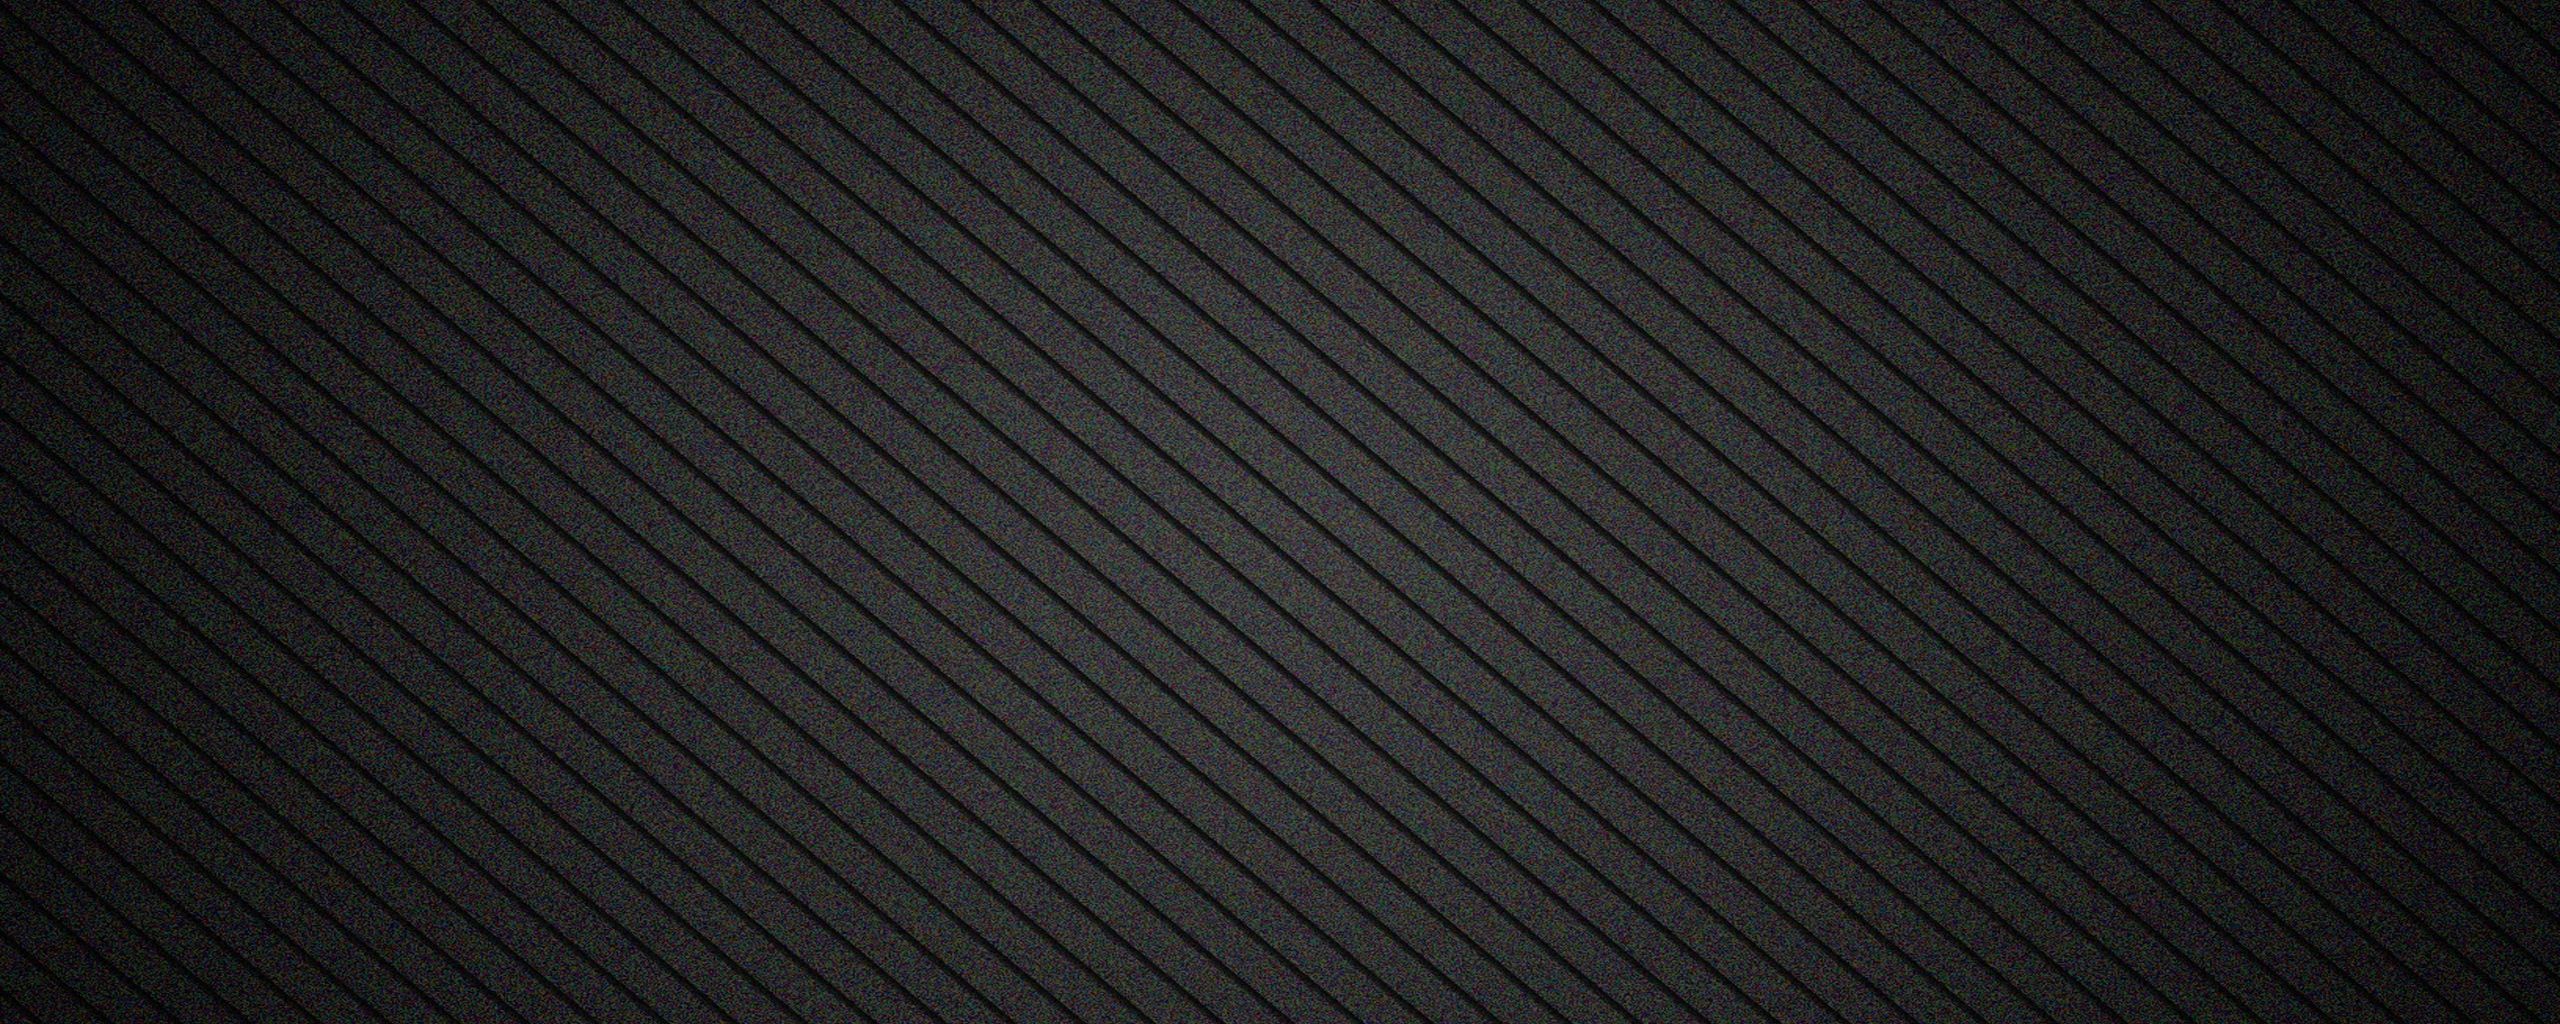 Download Wallpaper 2560x1024 Texture, Stripes, Obliquely, Shadow ...